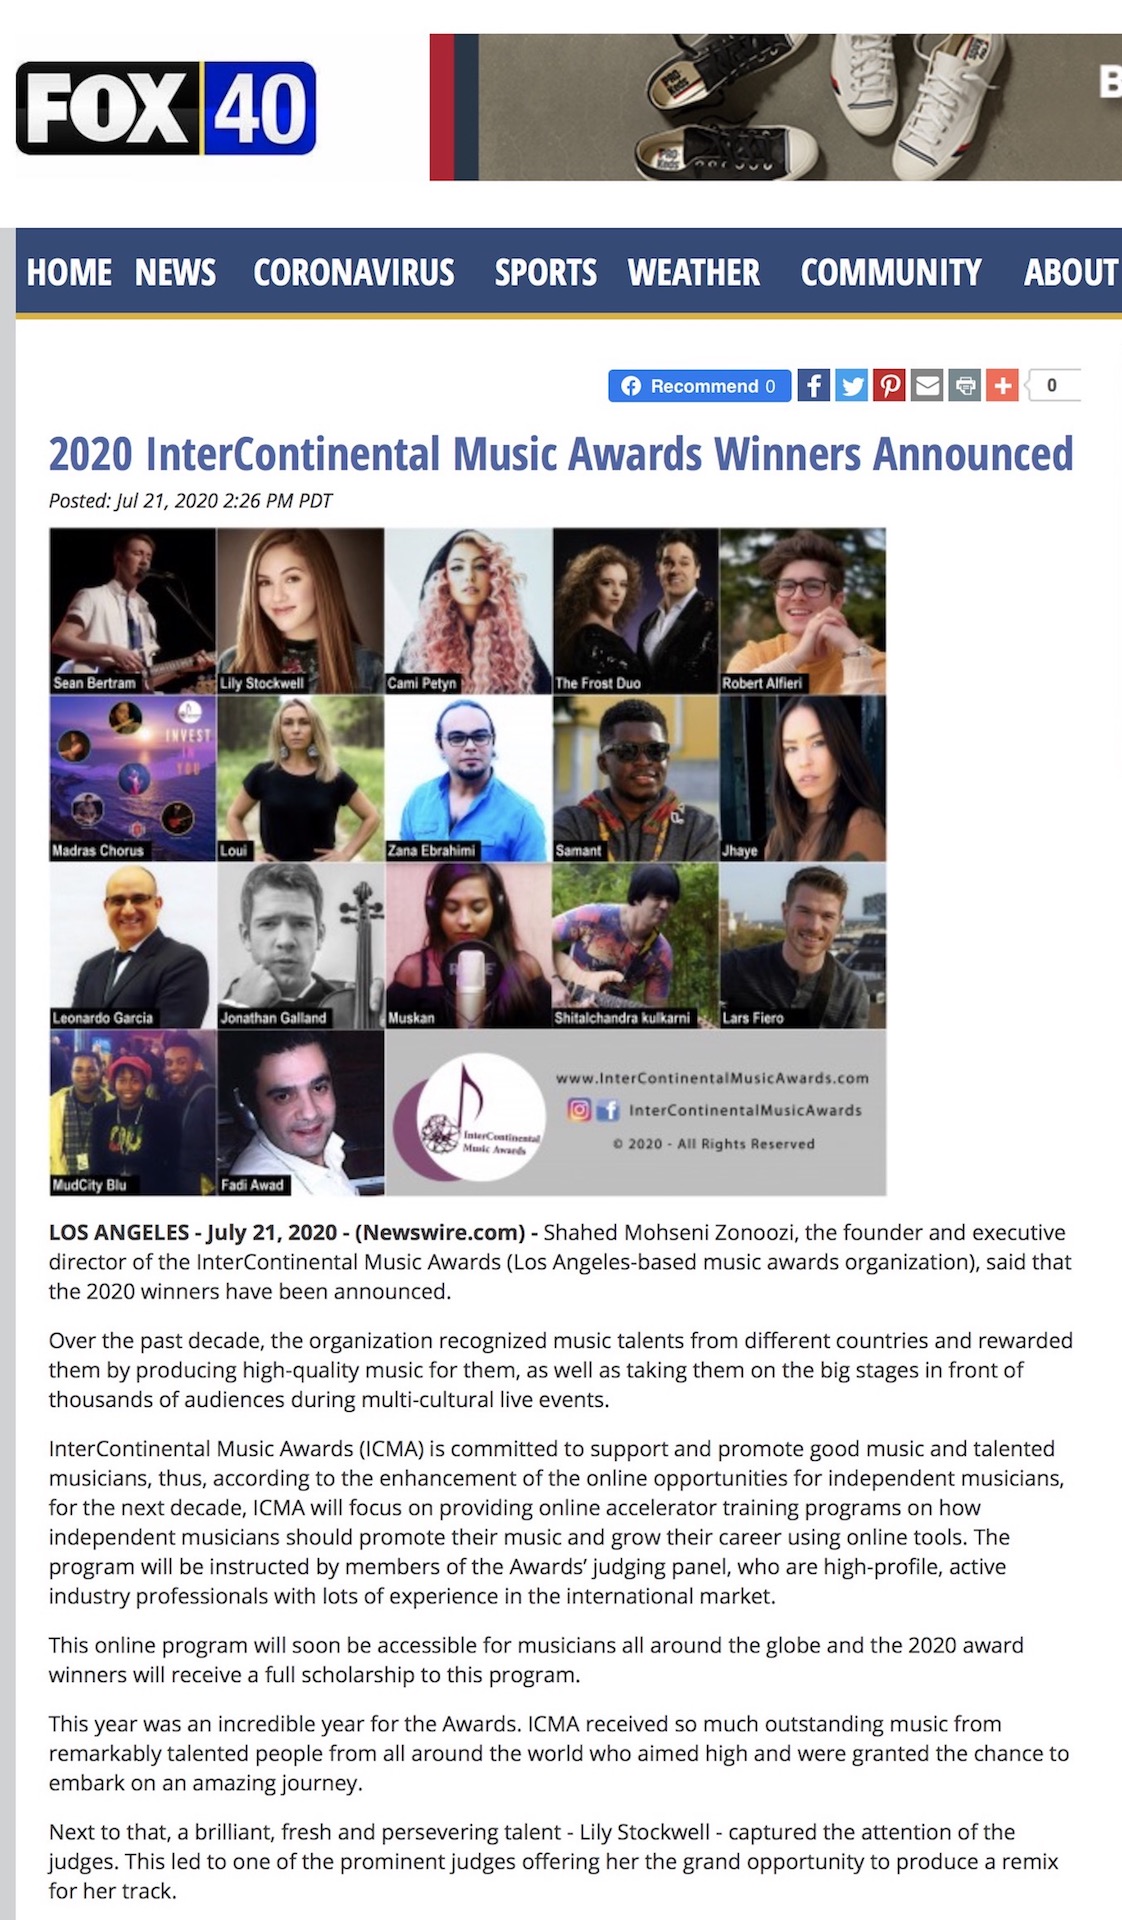 InterContinental Music Awards in fox news